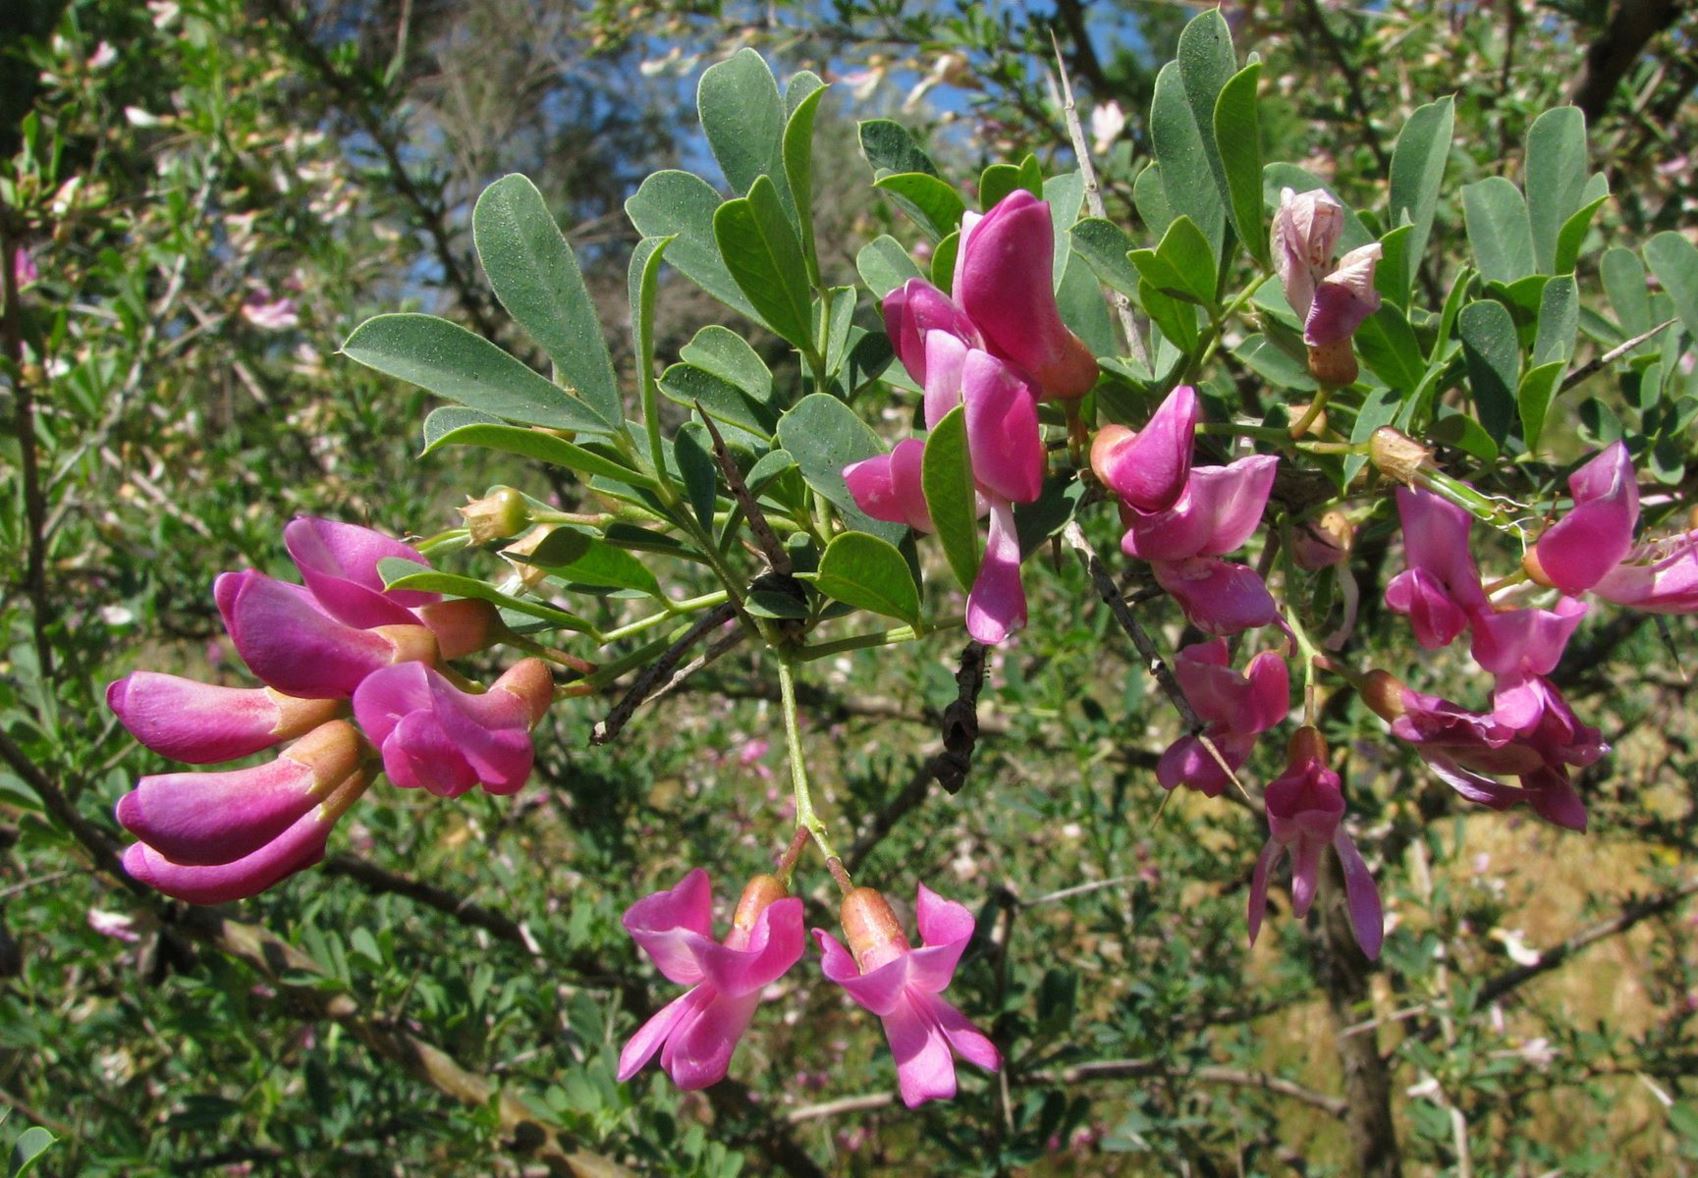 Halimodendron halodendron - Common Salt Tree, הלימודנדרון המלחות, הלימודנדרון המלחות, עץ המלח